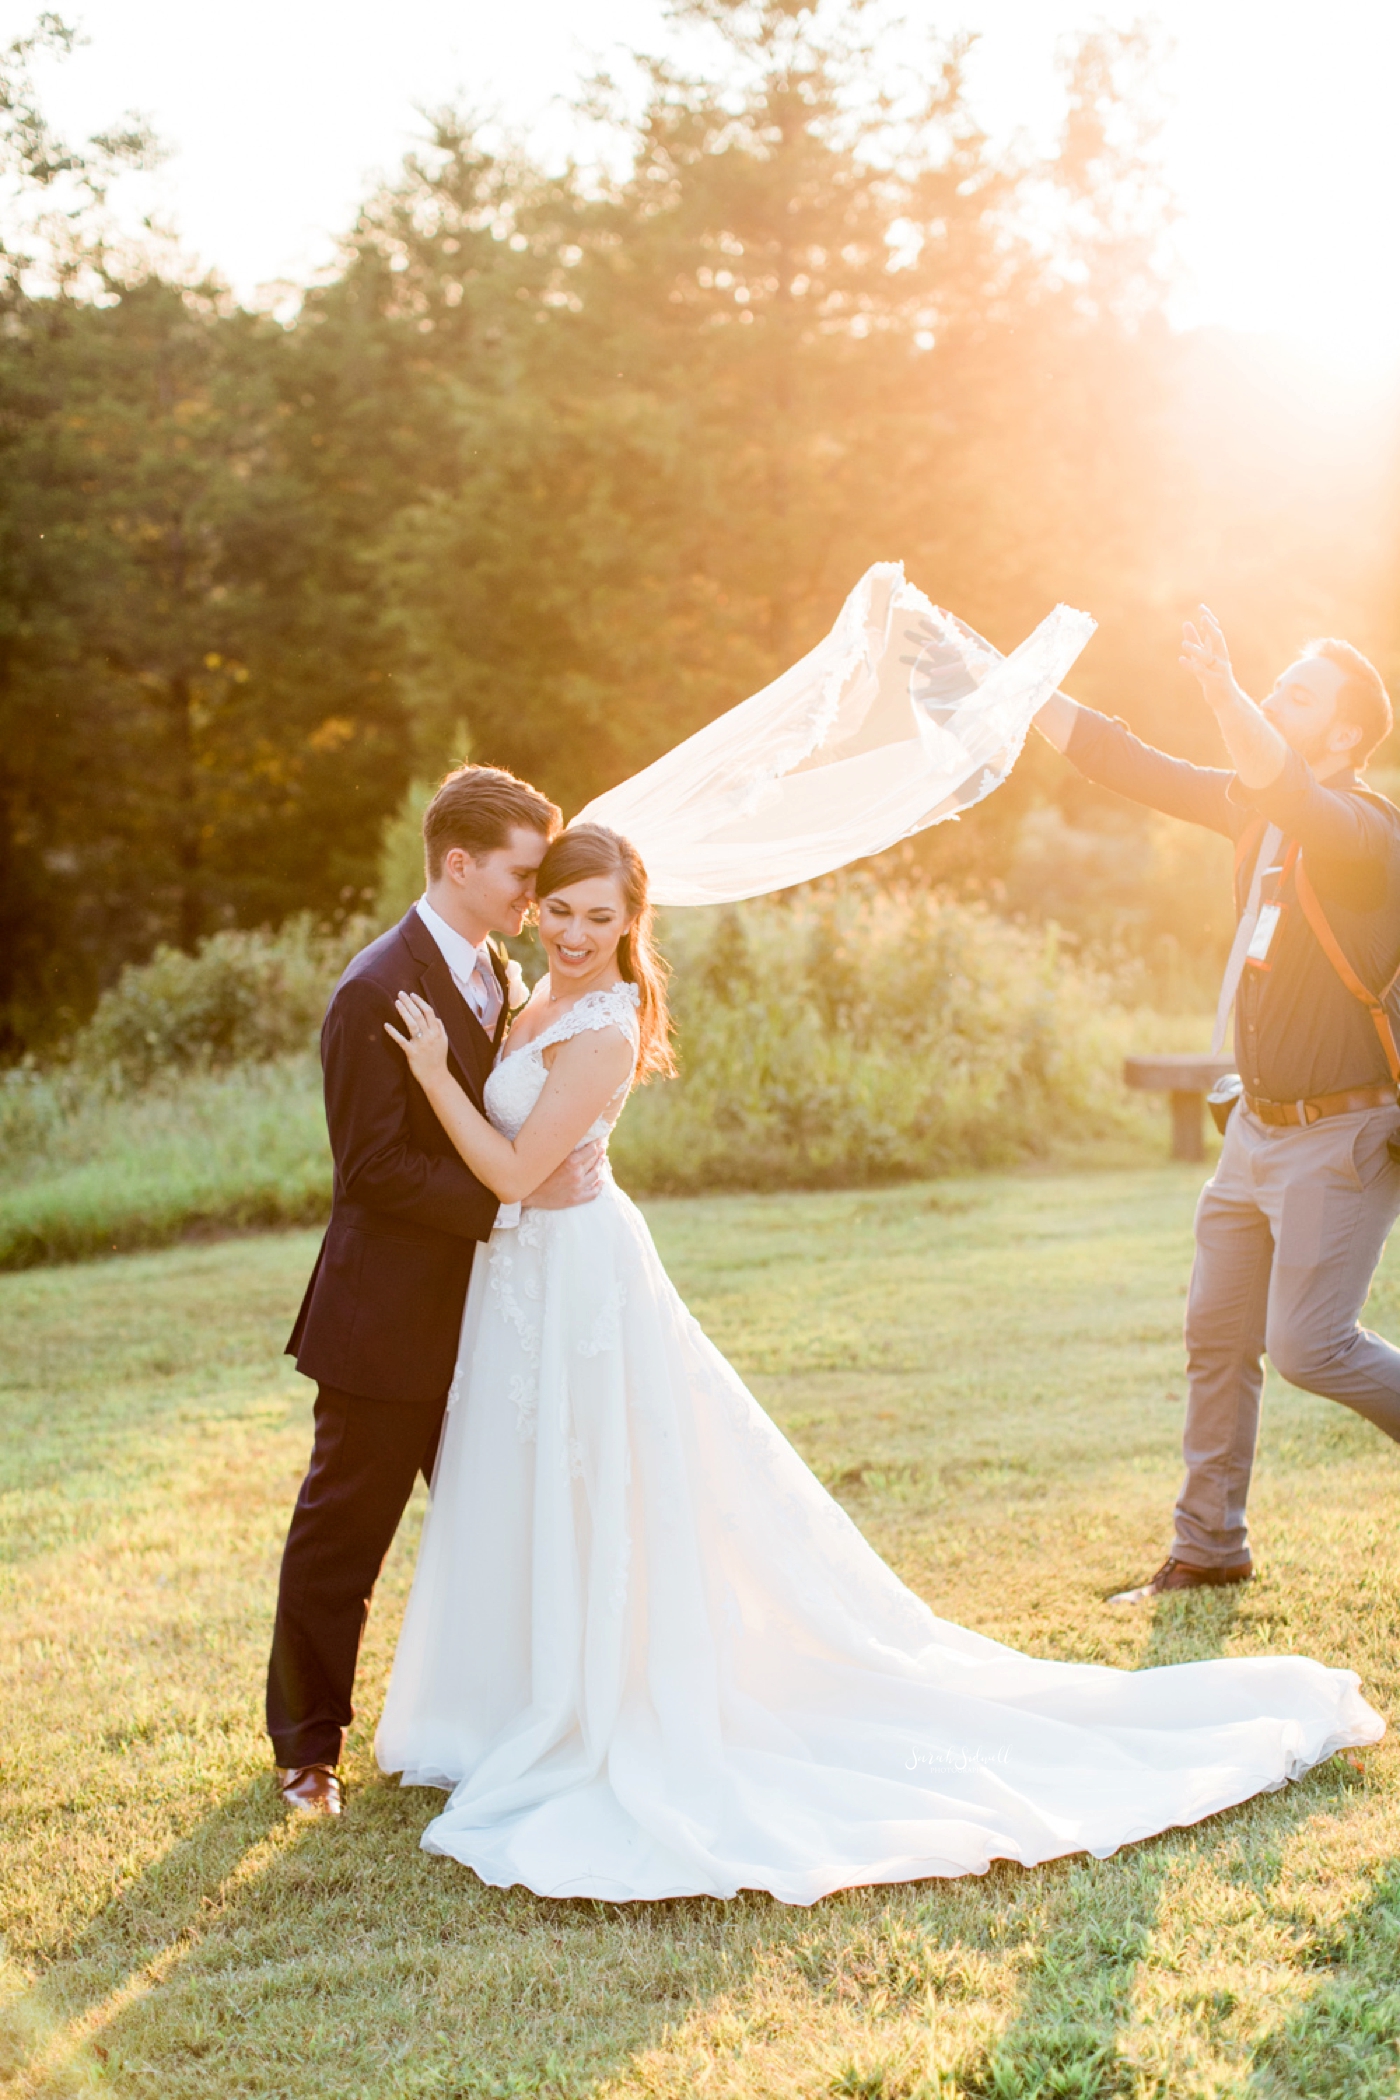 A photographer holds a bride's veil for a photo.